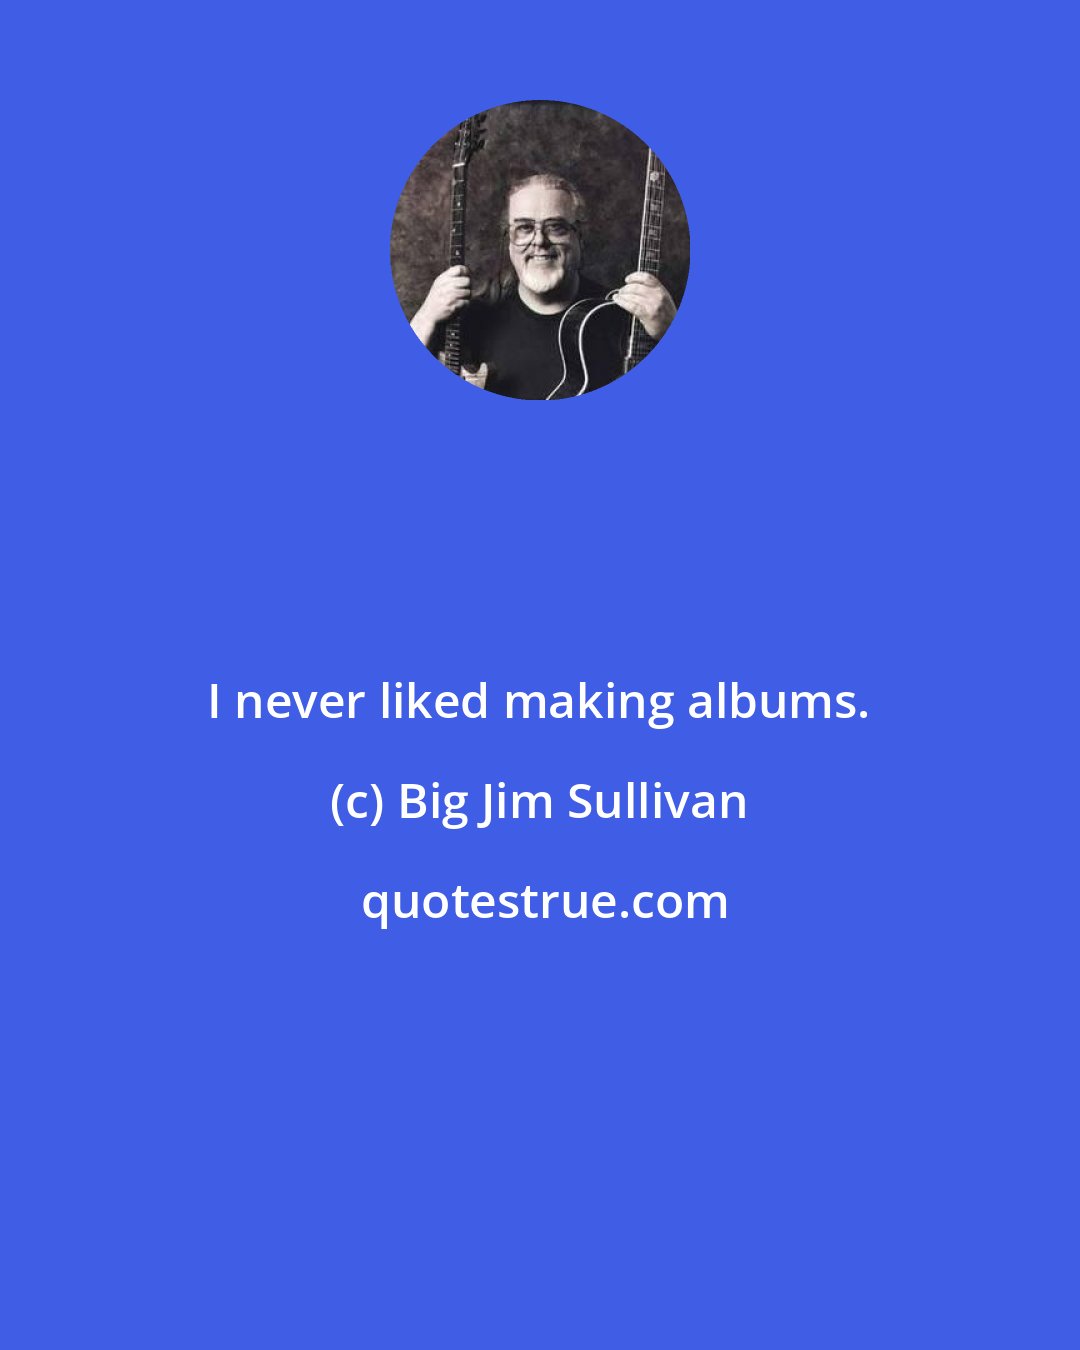 Big Jim Sullivan: I never liked making albums.